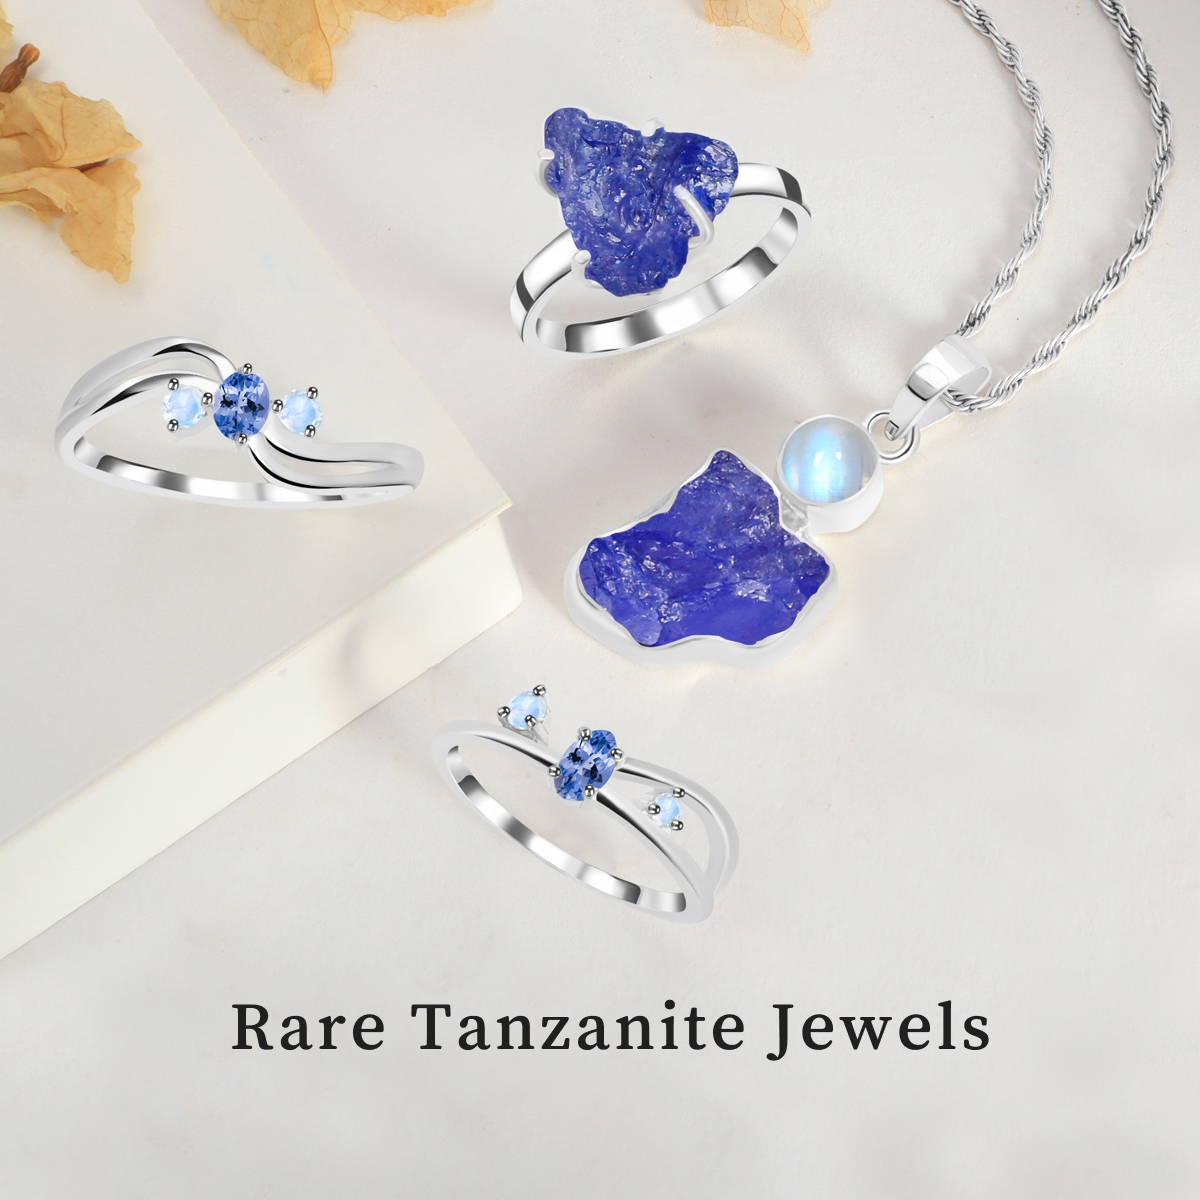 Tanzanite Jewelry